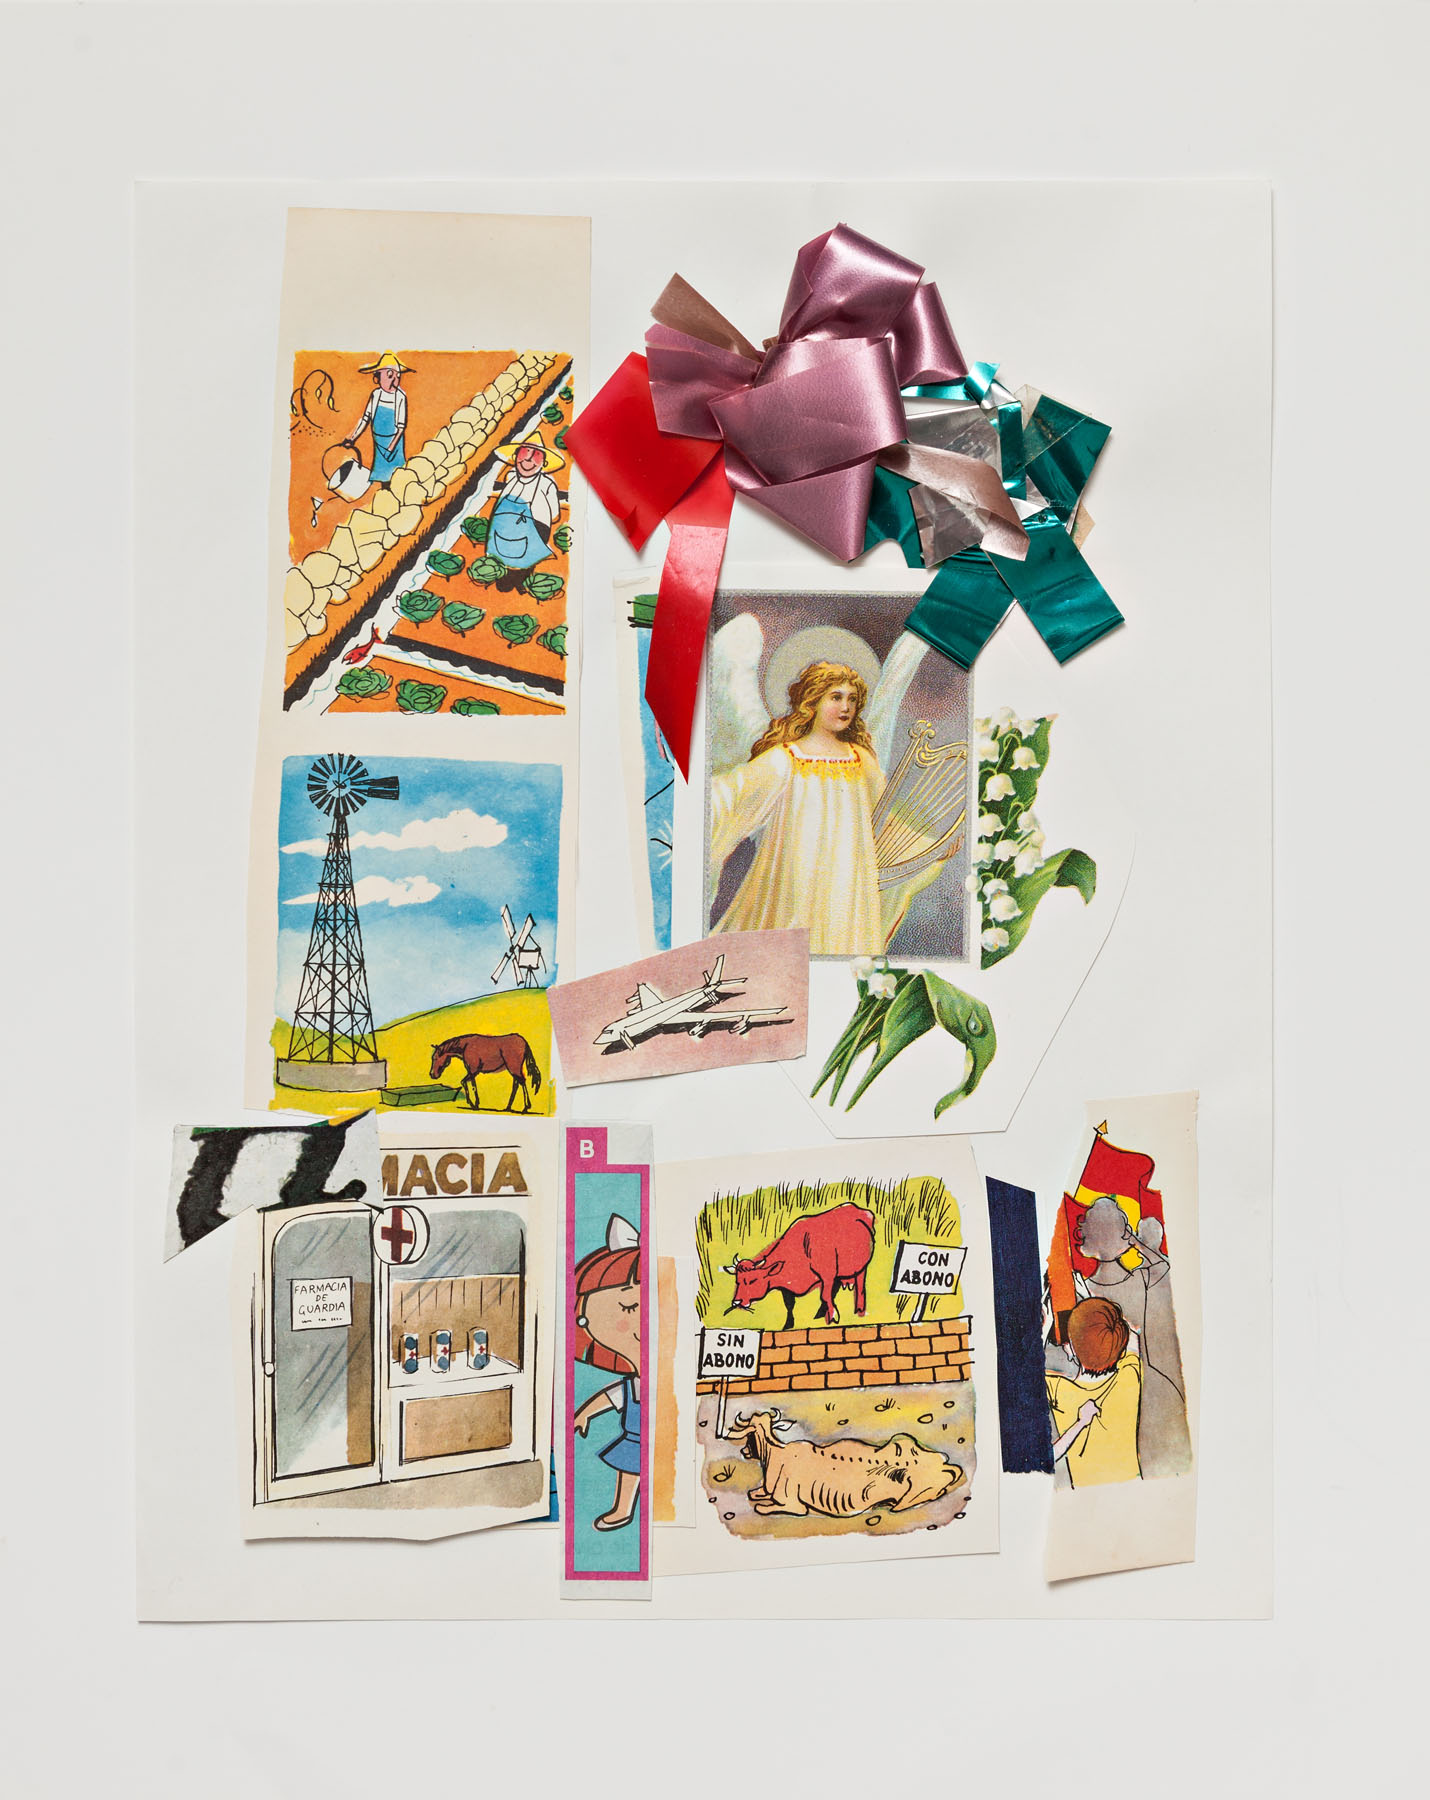 Serie Cuarentena, papel collage, 35 cm x 28 cm, 2020